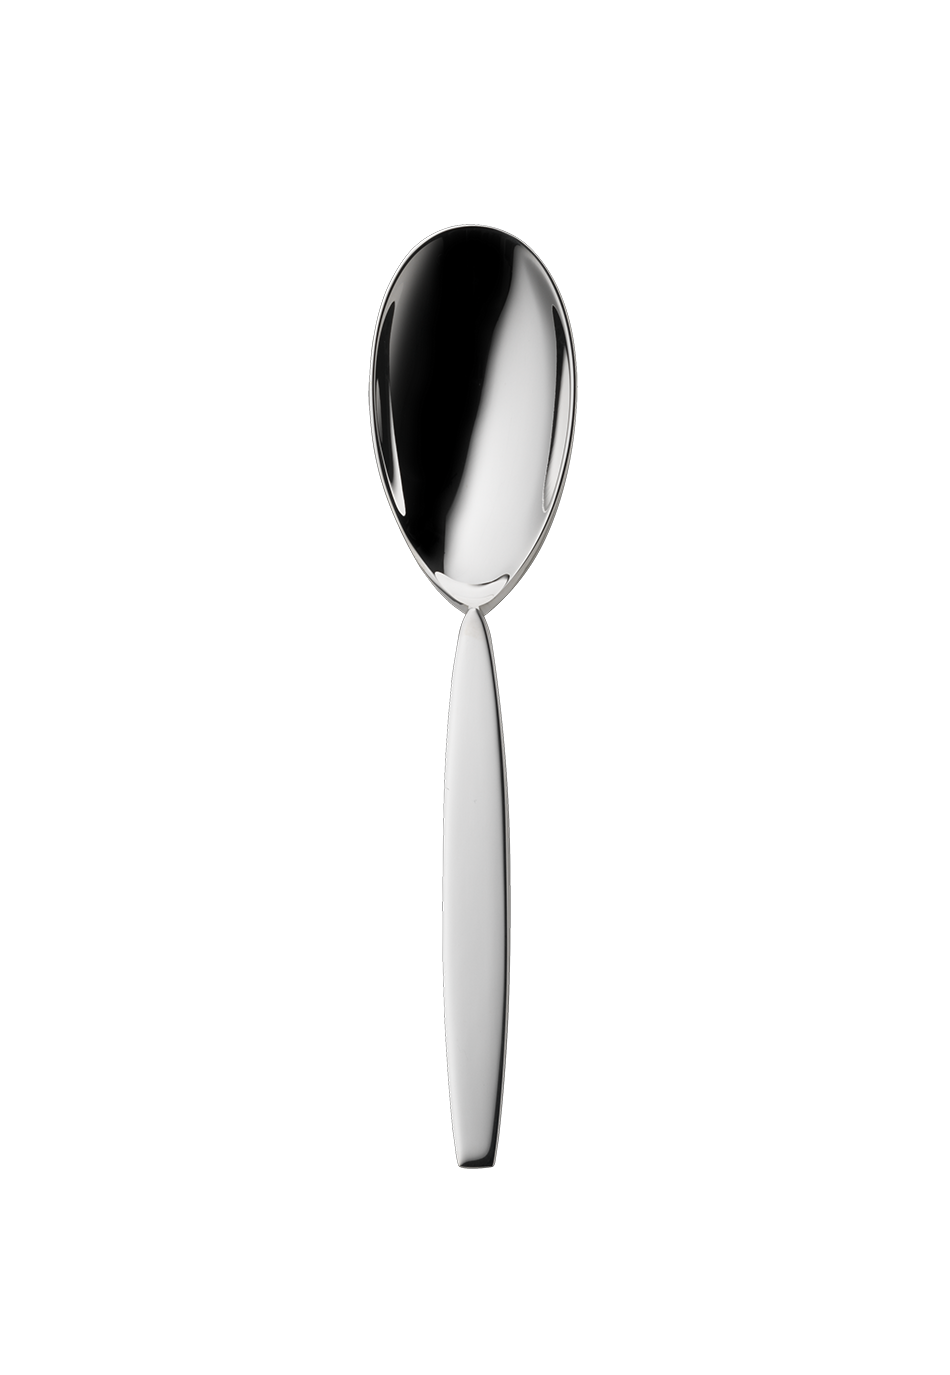 12" Sugar Spoon (150g massive silverplated)